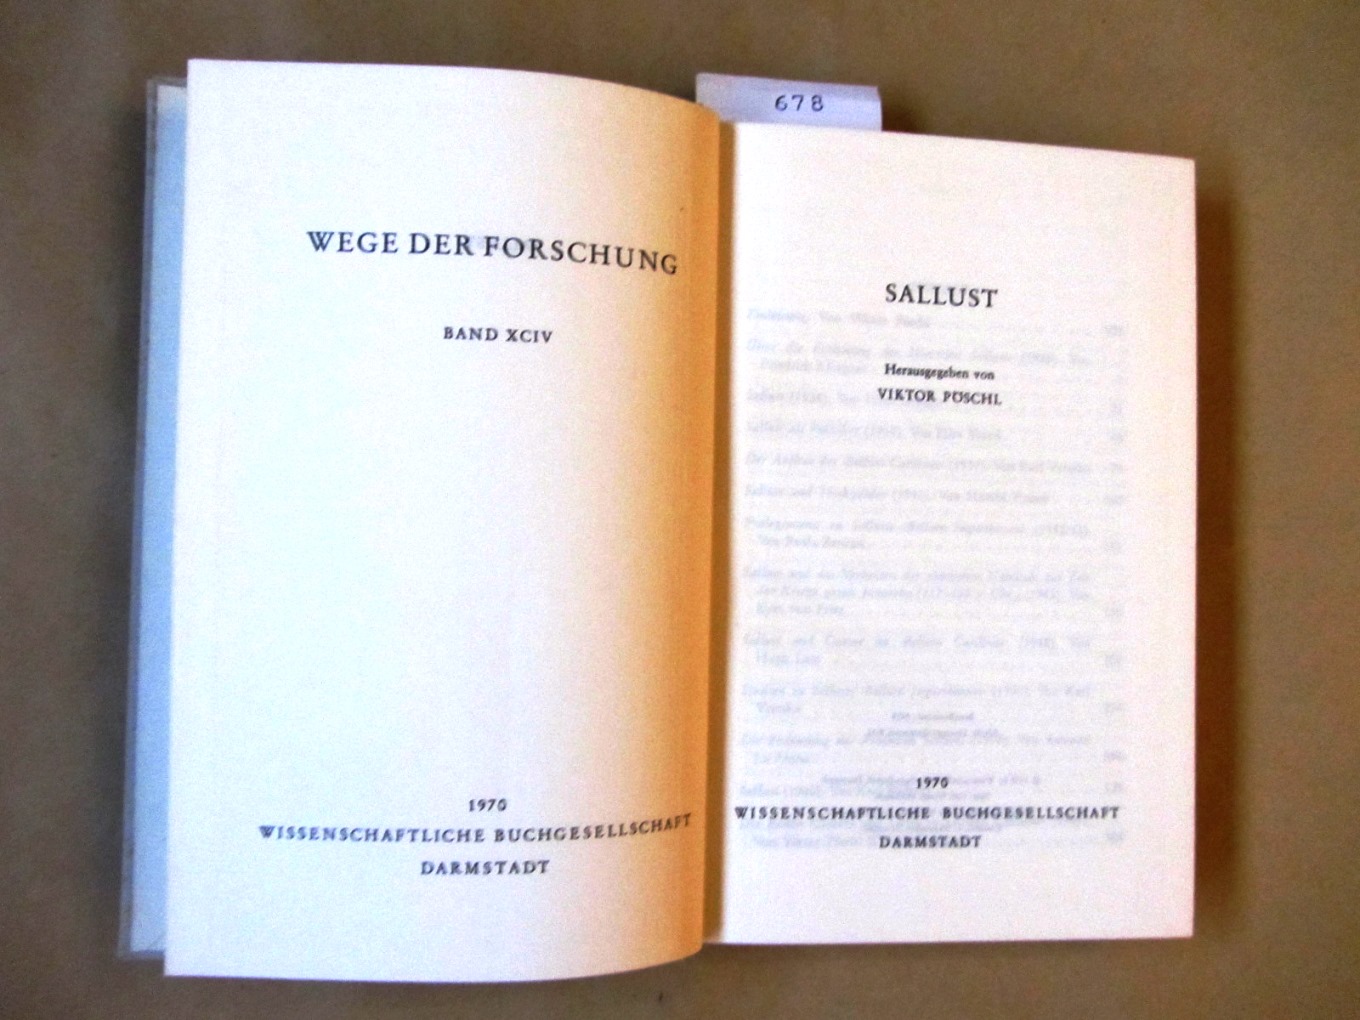 Pöschl, Viktor (Hrsg.):  Sallust. ("Wege der Forschung", XCIV) 